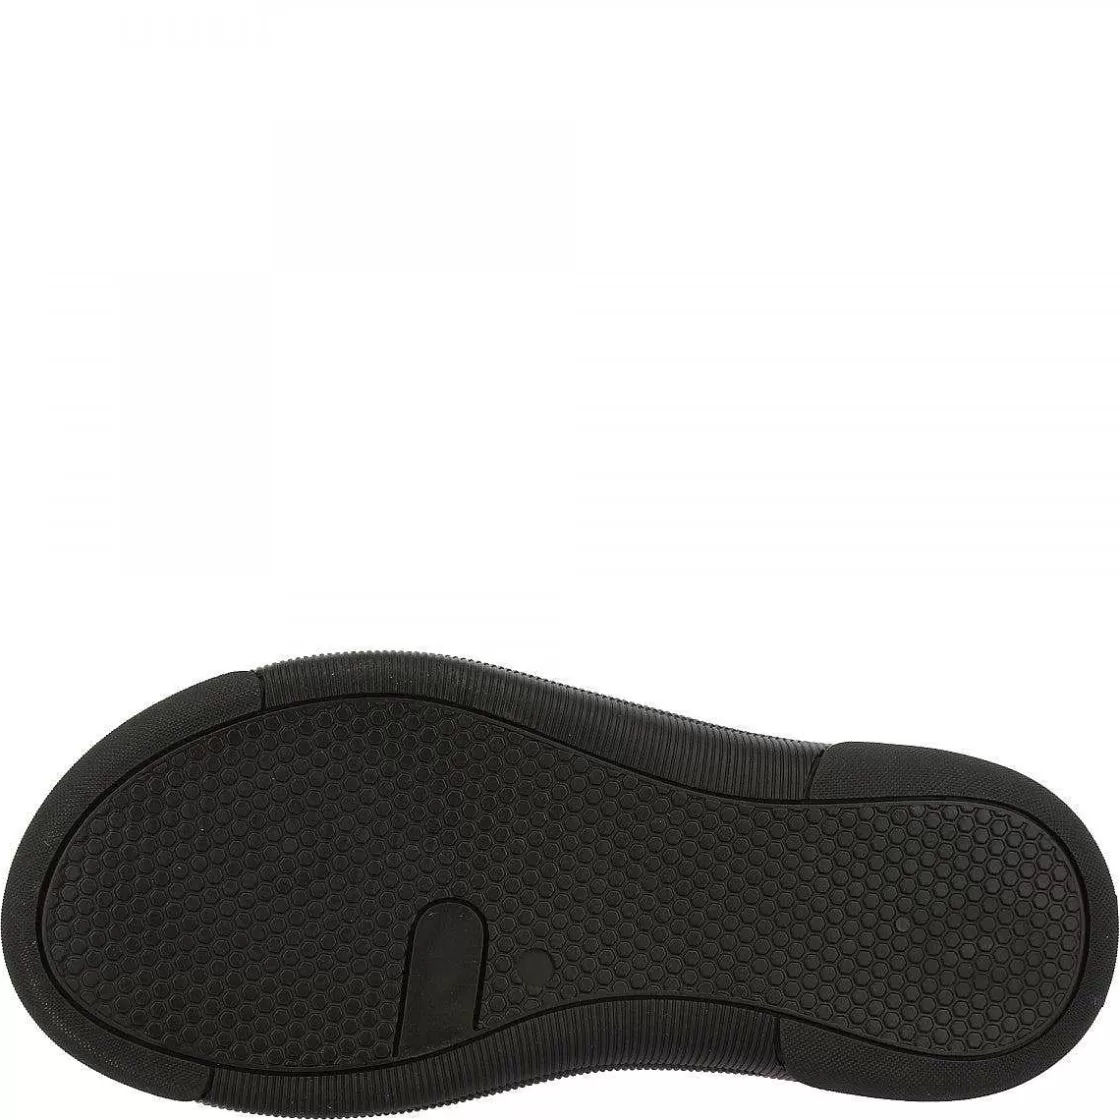 Leonardo Men'S Slipper Sandals With Wide Band Handmade In Black Calf Leather Best Sale